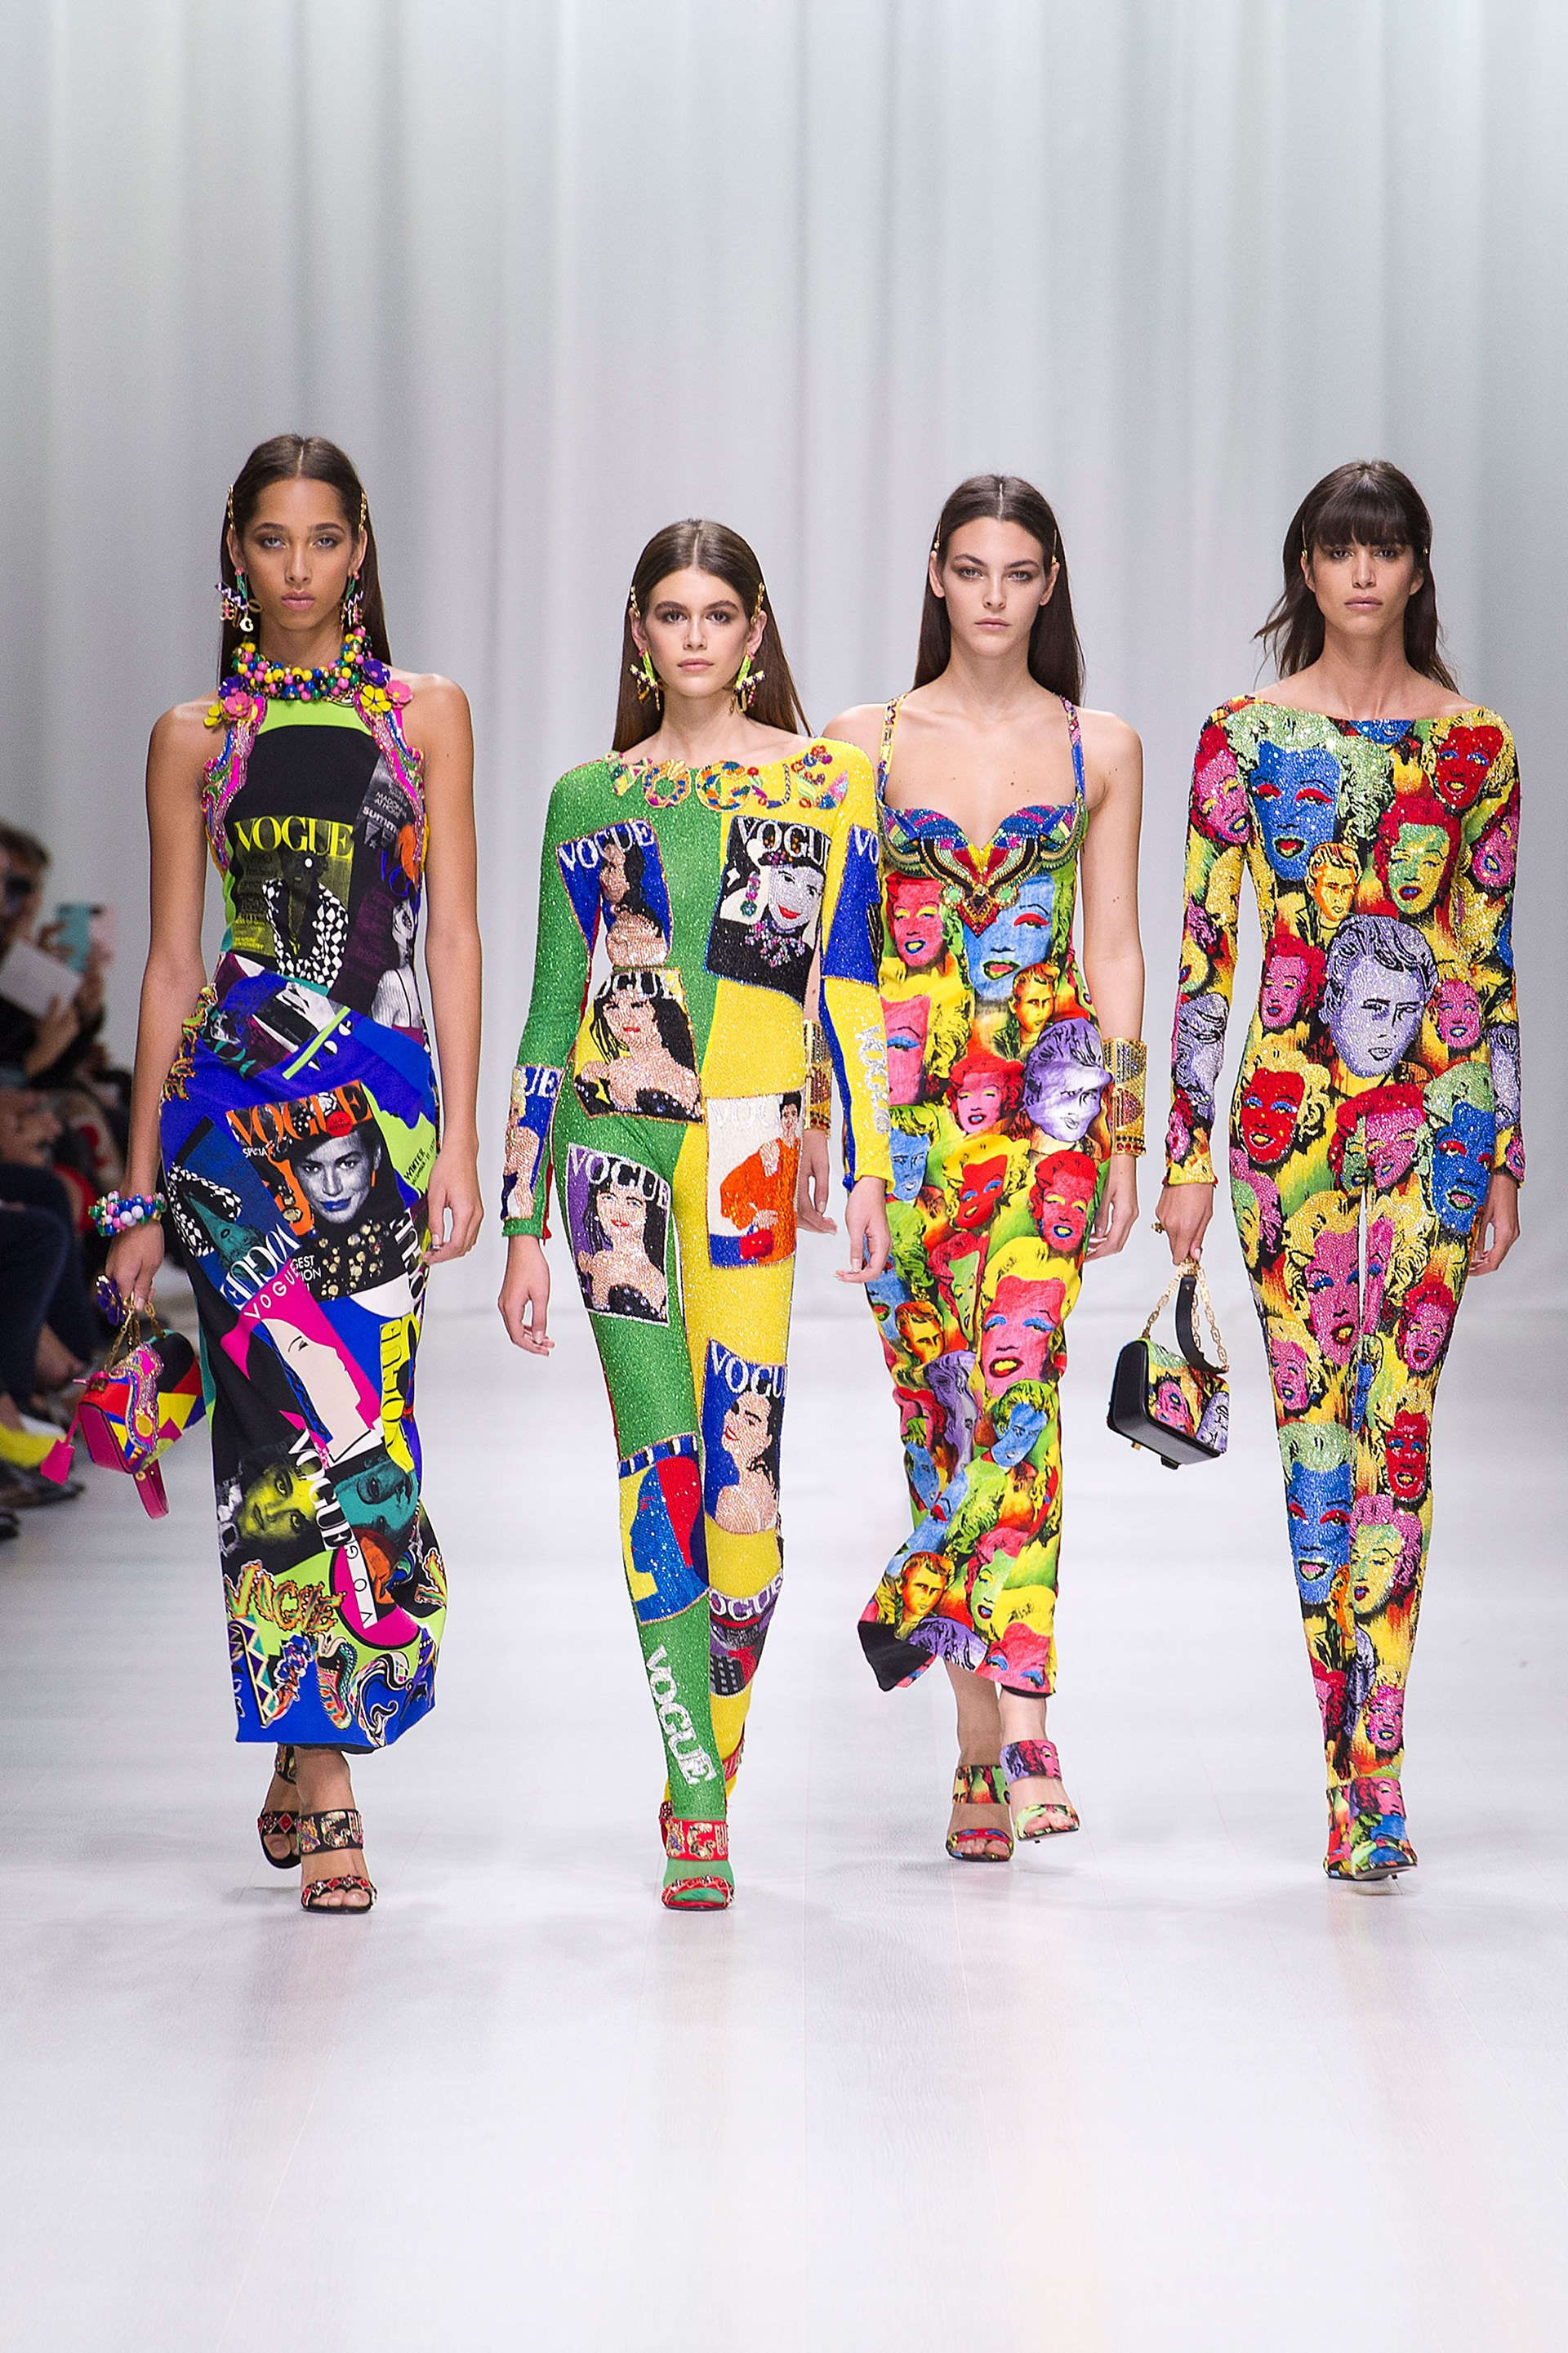 Versace's supermodels reunite at Milan fashion show